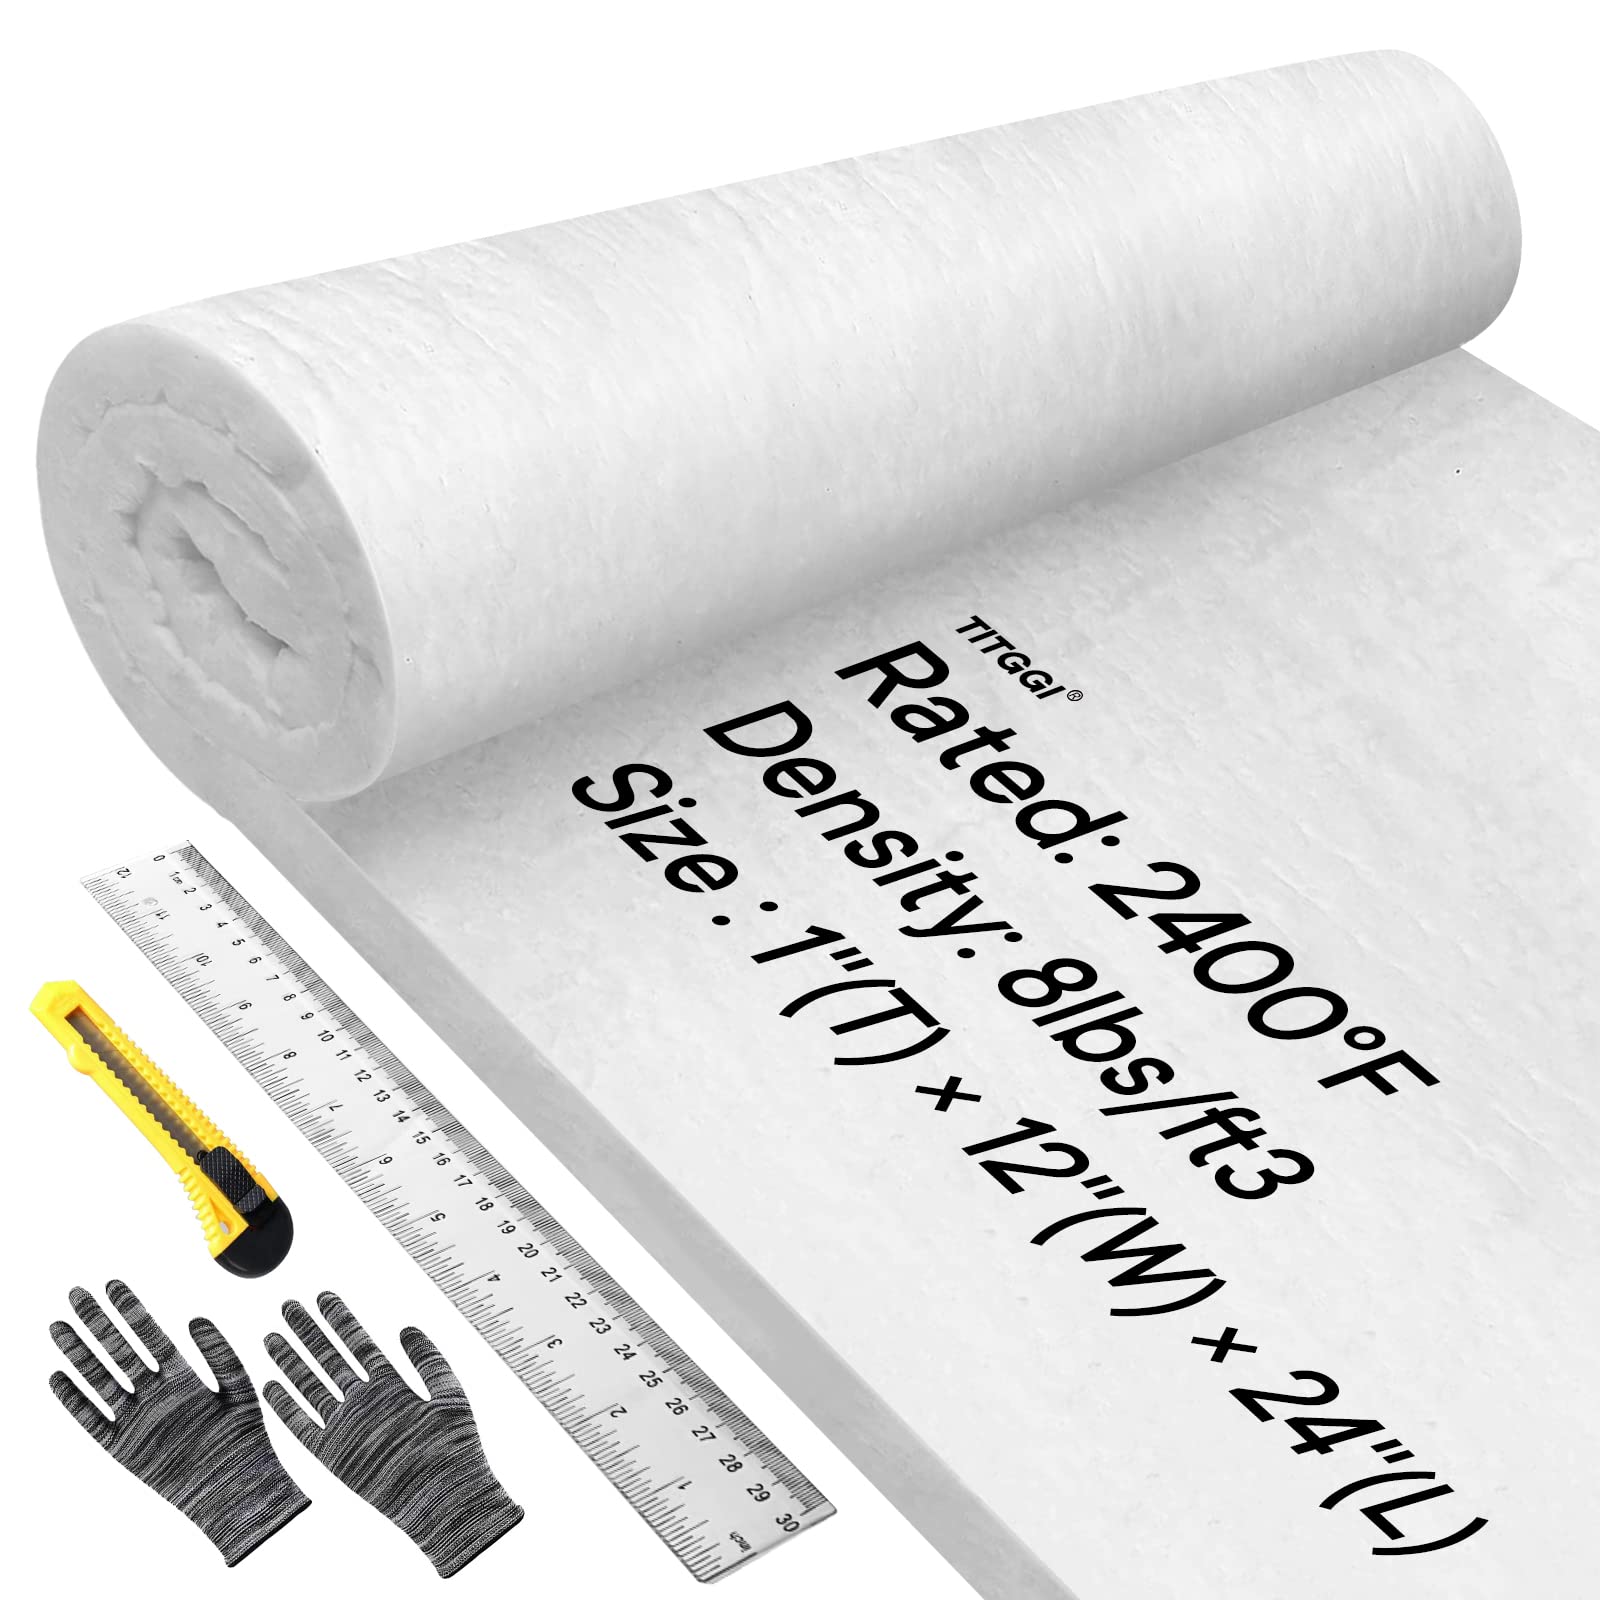 TITGGI Kaowool Fireproof Ceramic Fiber Insulation Blanket (2400F 1x 12x  24), High Temperature Ceramic Fiber Blanket for Stoves, Kilns, Dishwasher  & Oven Insulation - Including Ruler, Gloves, Knife